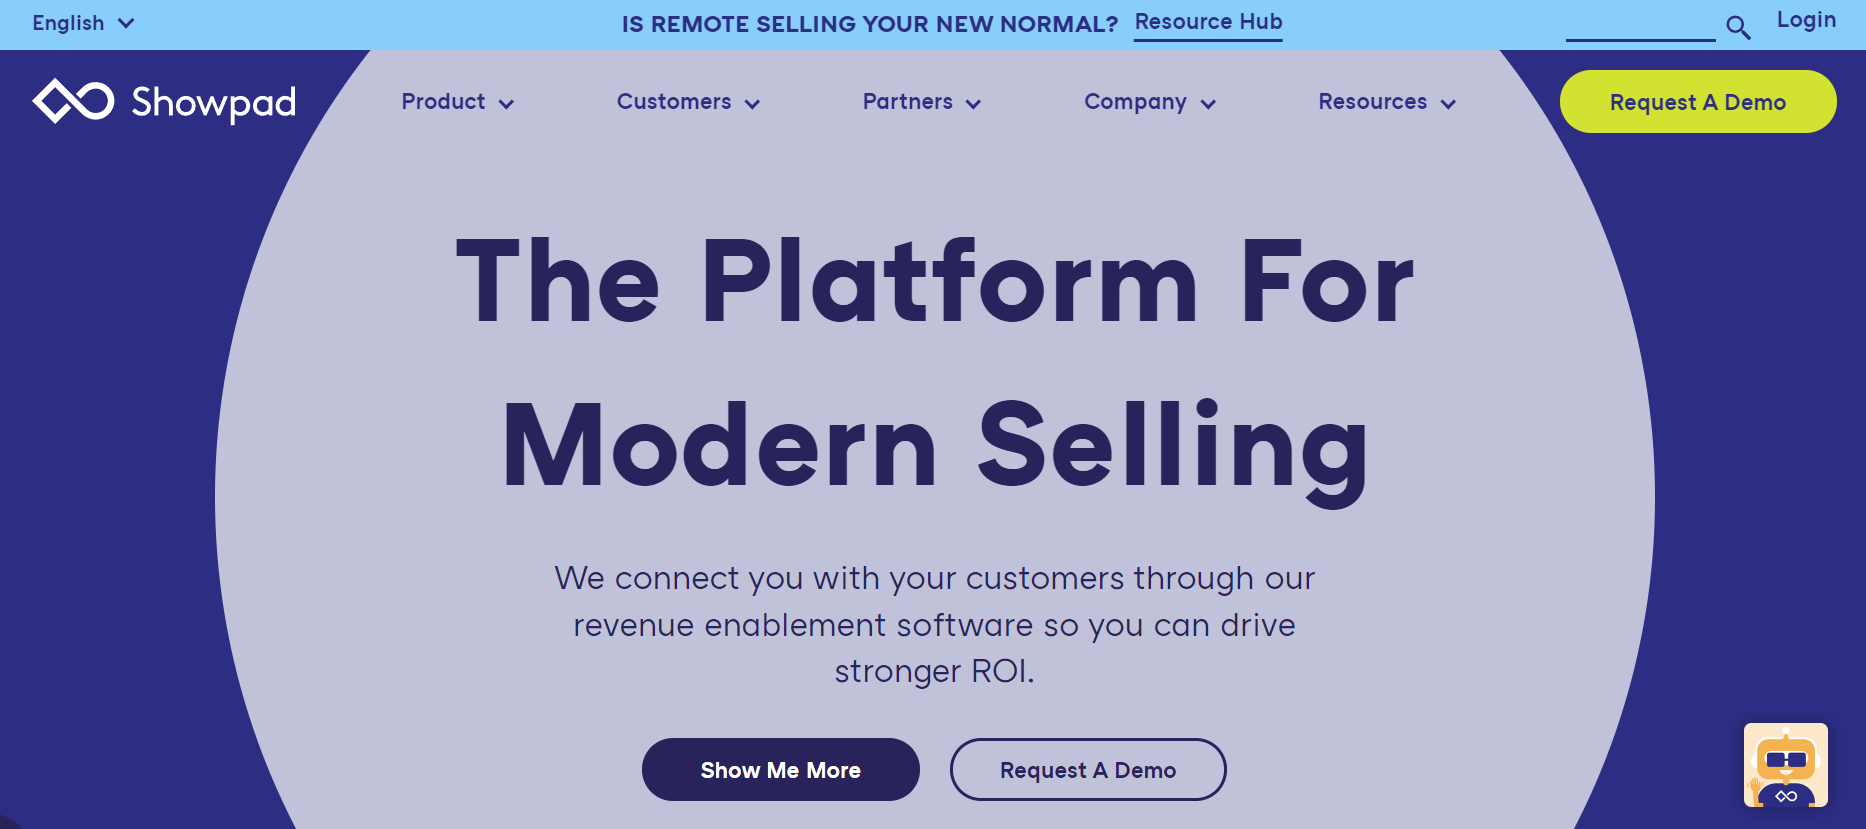 Showpad homepage: The Platform for Modern Selling